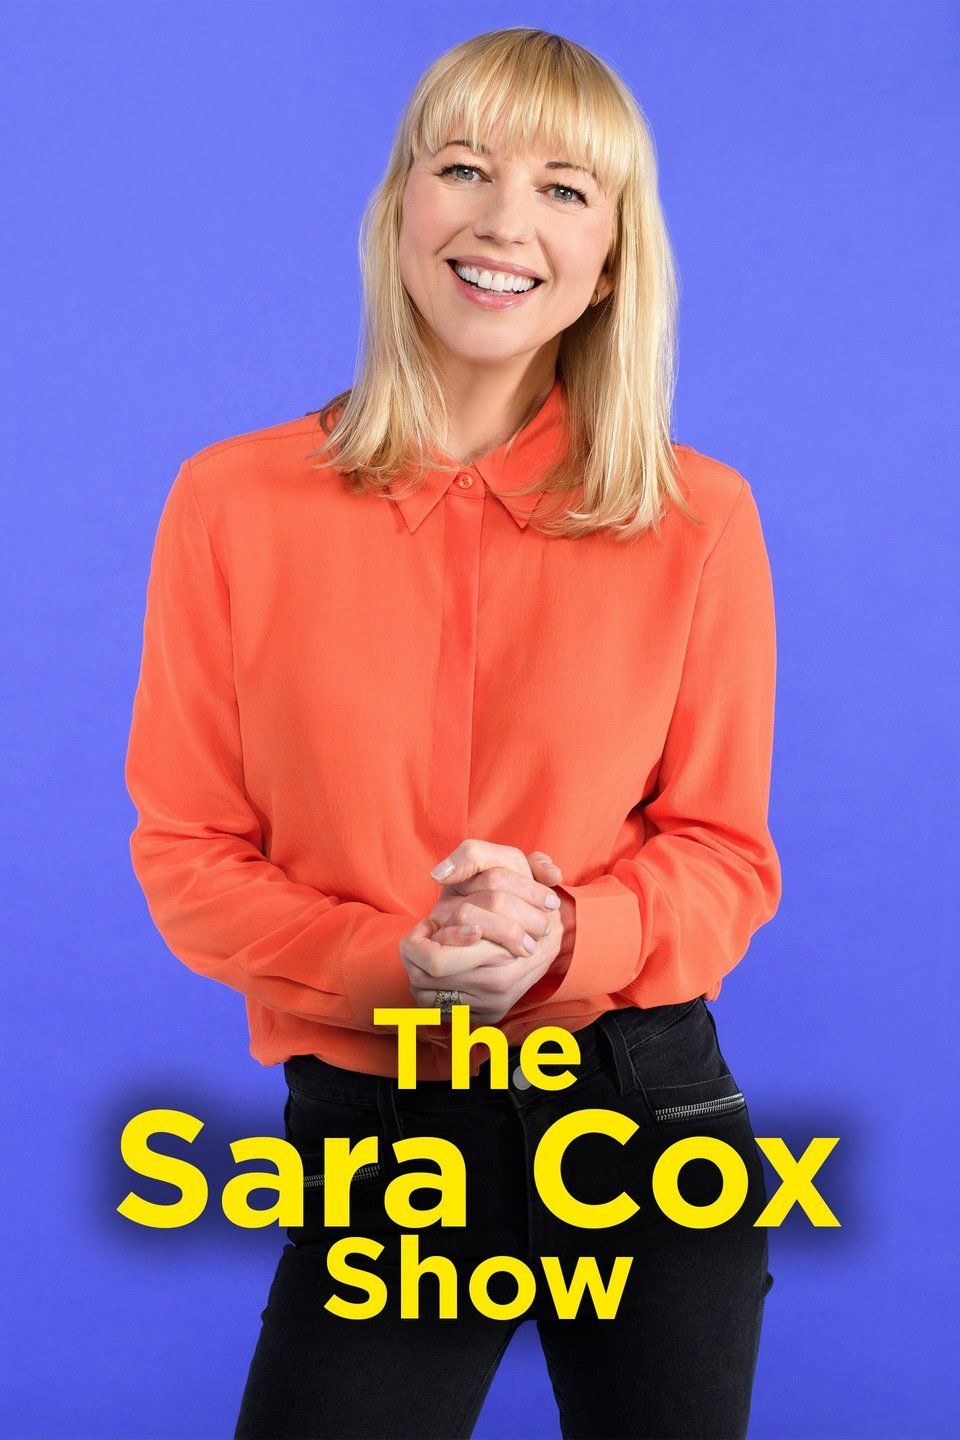 The Sara Cox Show